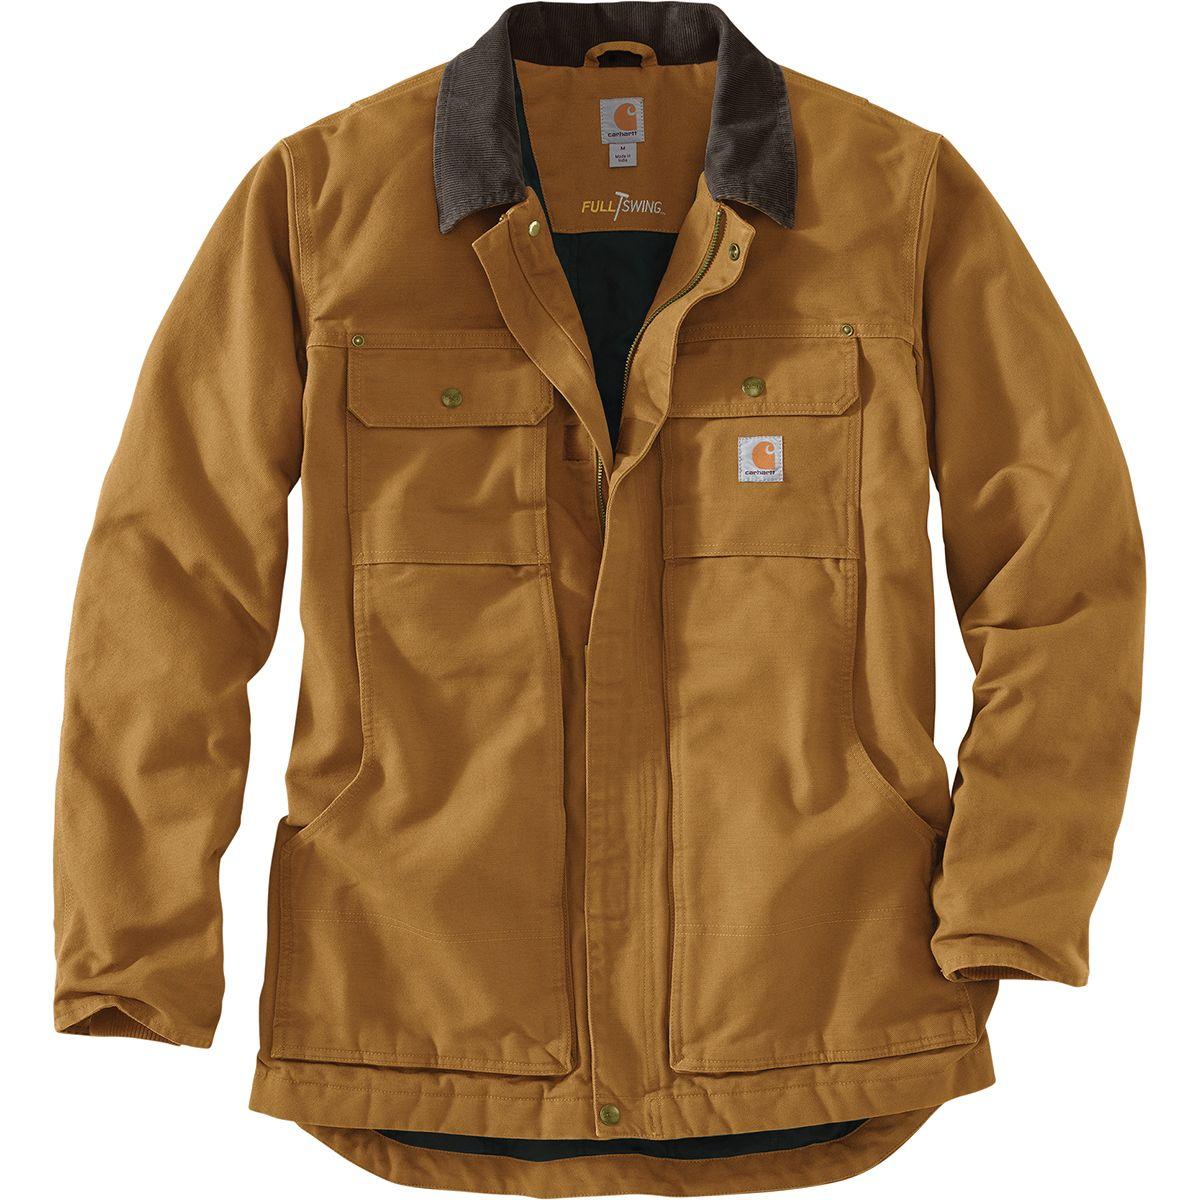 Carhartt Fleece Full Swing Chore Coat in Brown for Men - Save 57% - Lyst